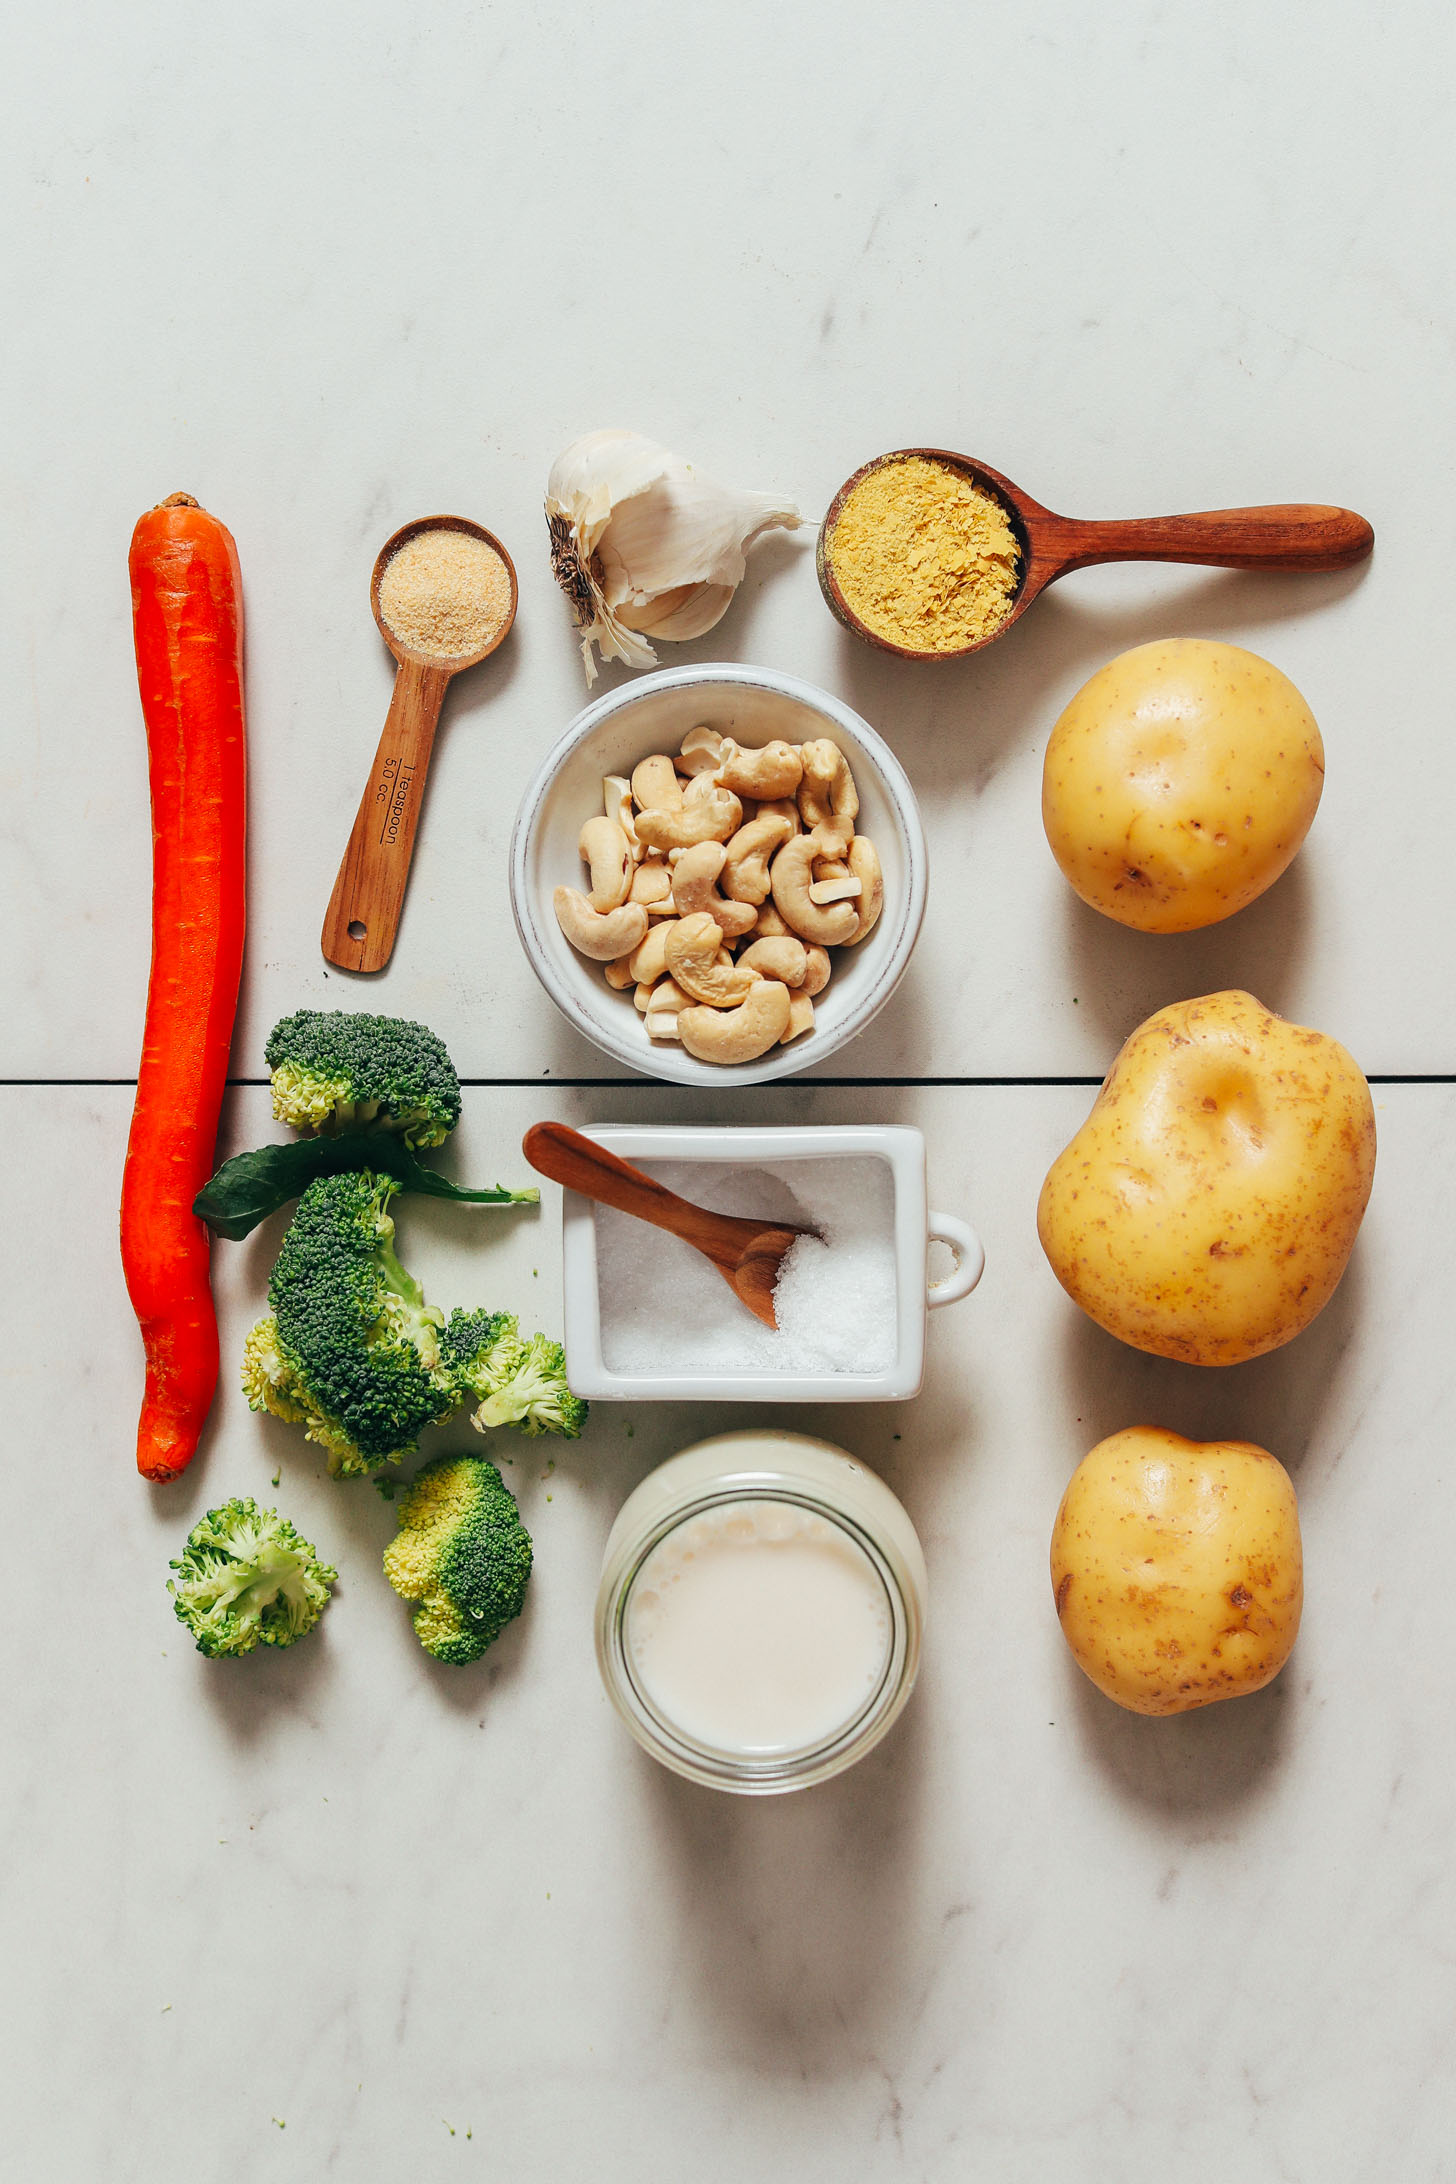 Carrot, broccoli, dairy-free milk, salt, cashews, garlic powder, garlic, nutritional yeast, and gold potatoes